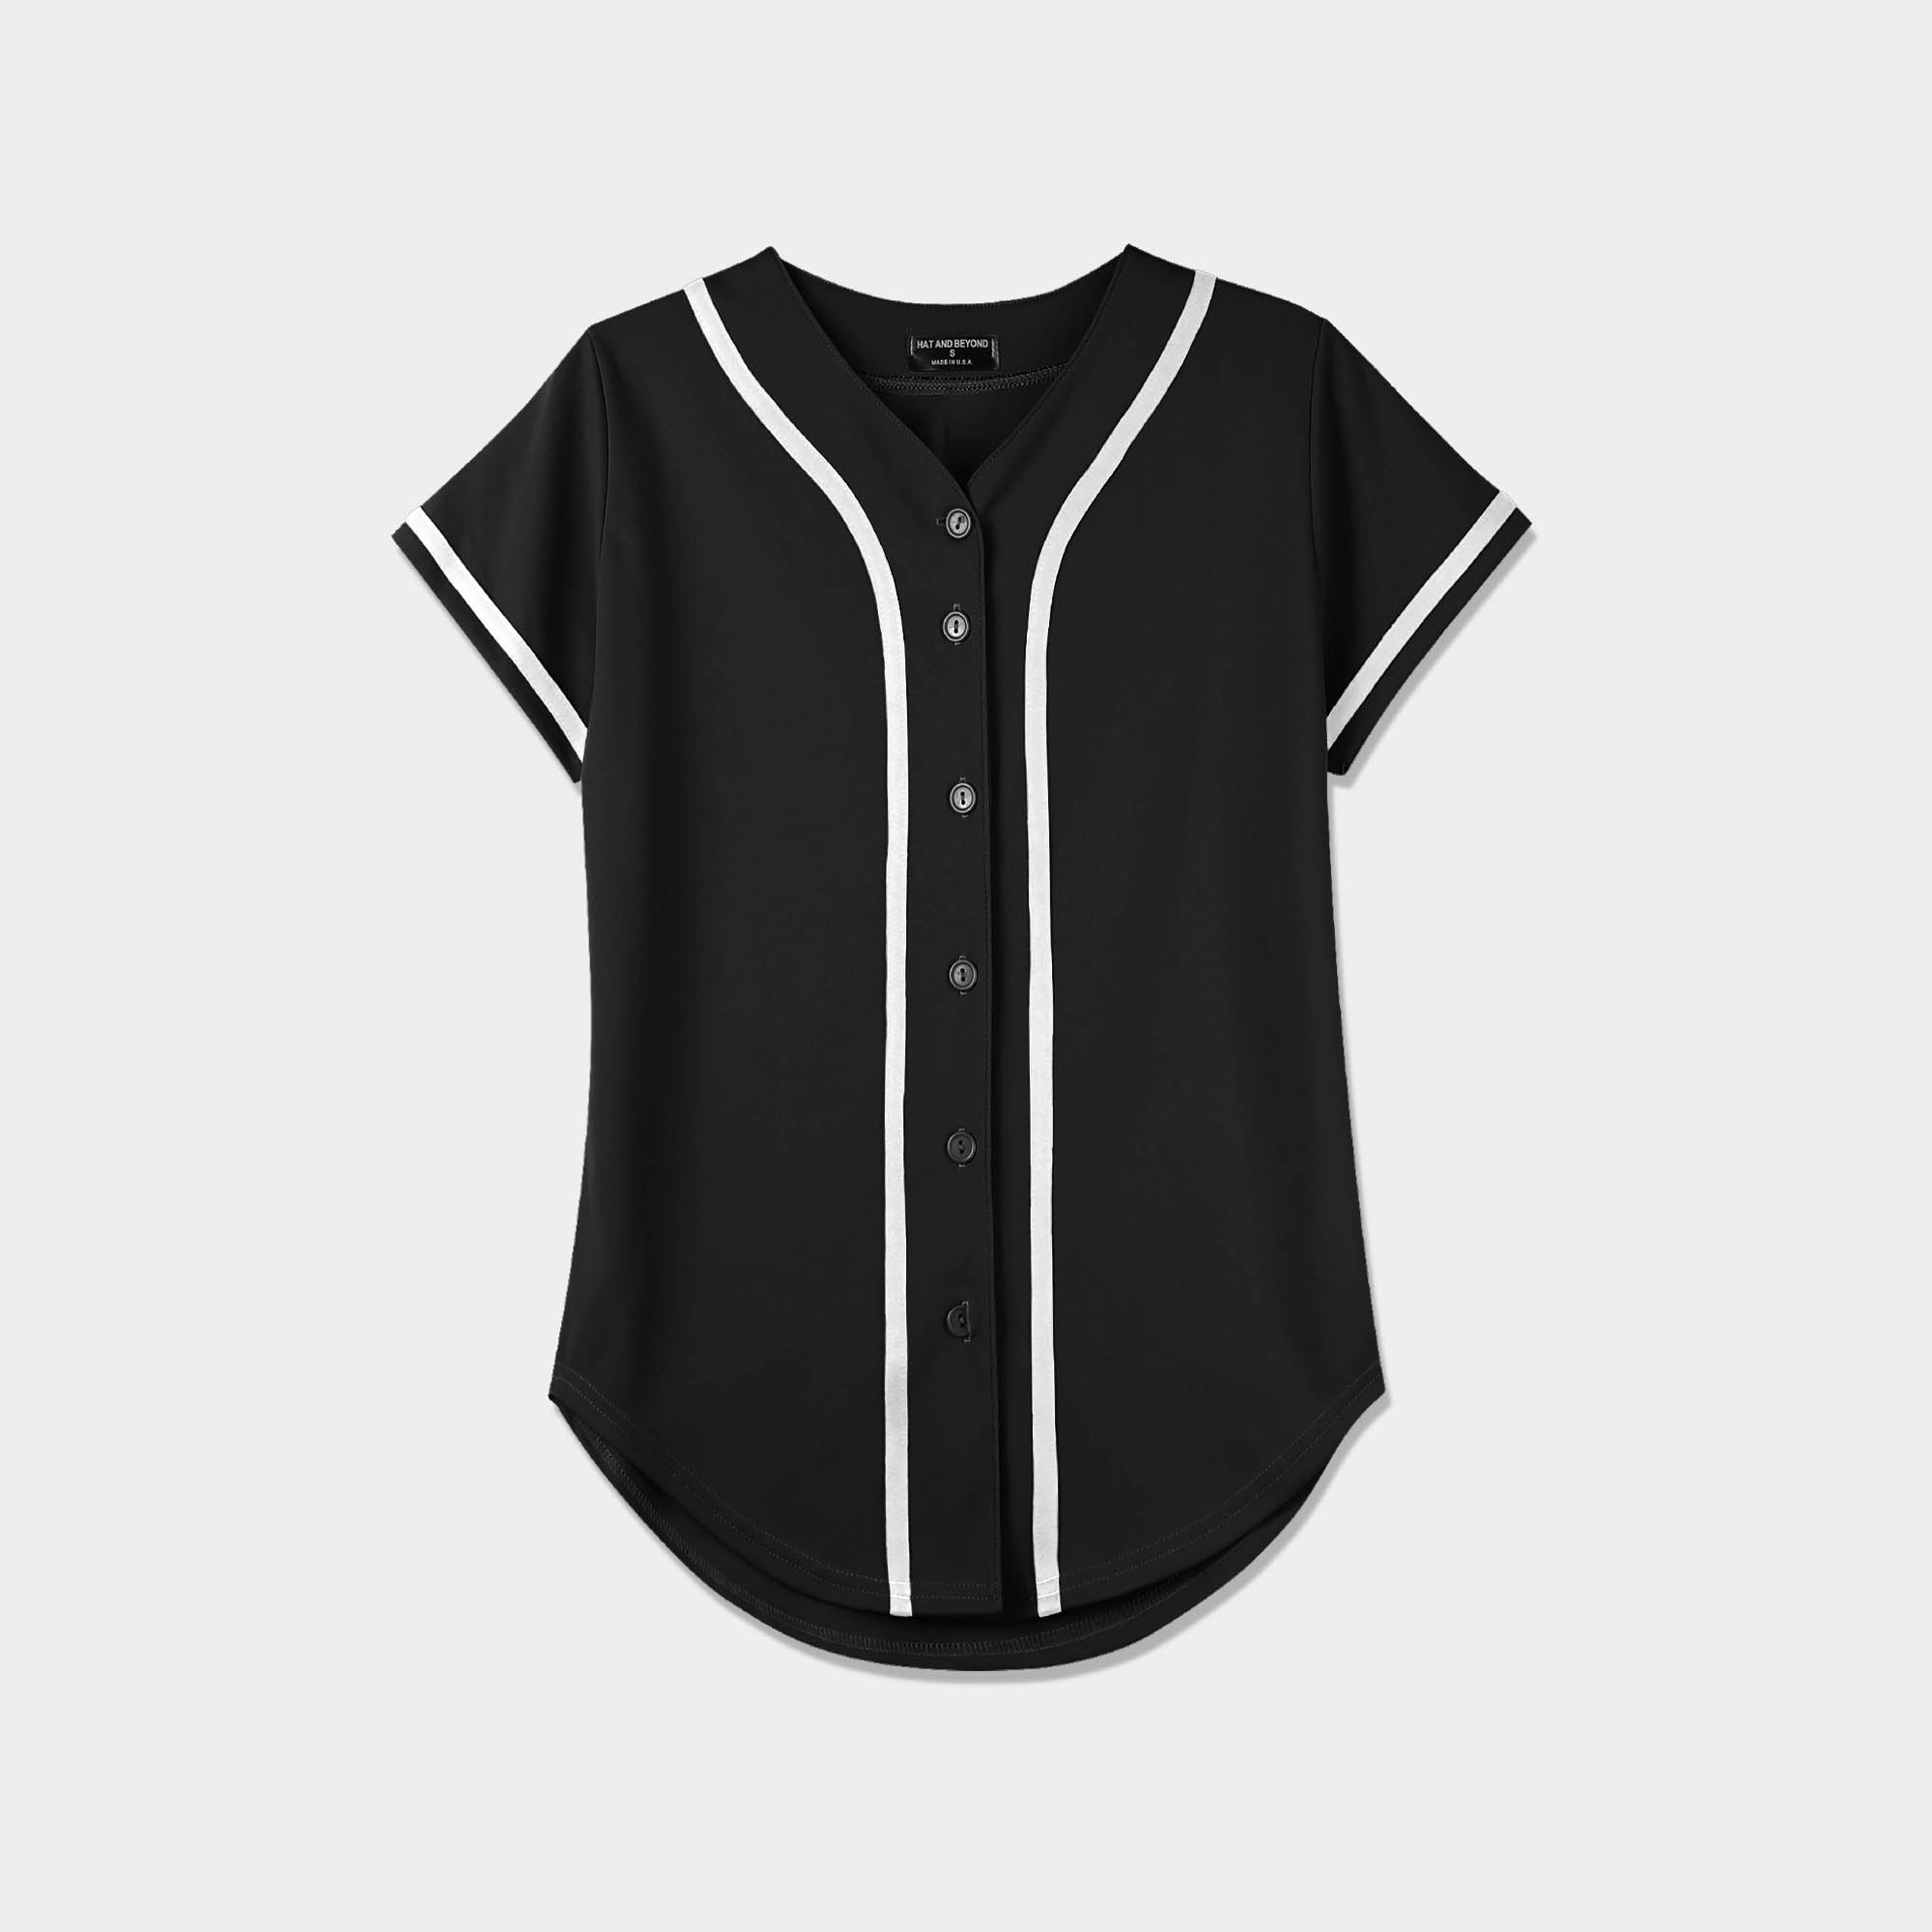  Women Baseball Jersey Dress Button Down Shirts Oversized T-Shirts  Baseball Costume Tops Fashion Streetwear Black : Sports & Outdoors